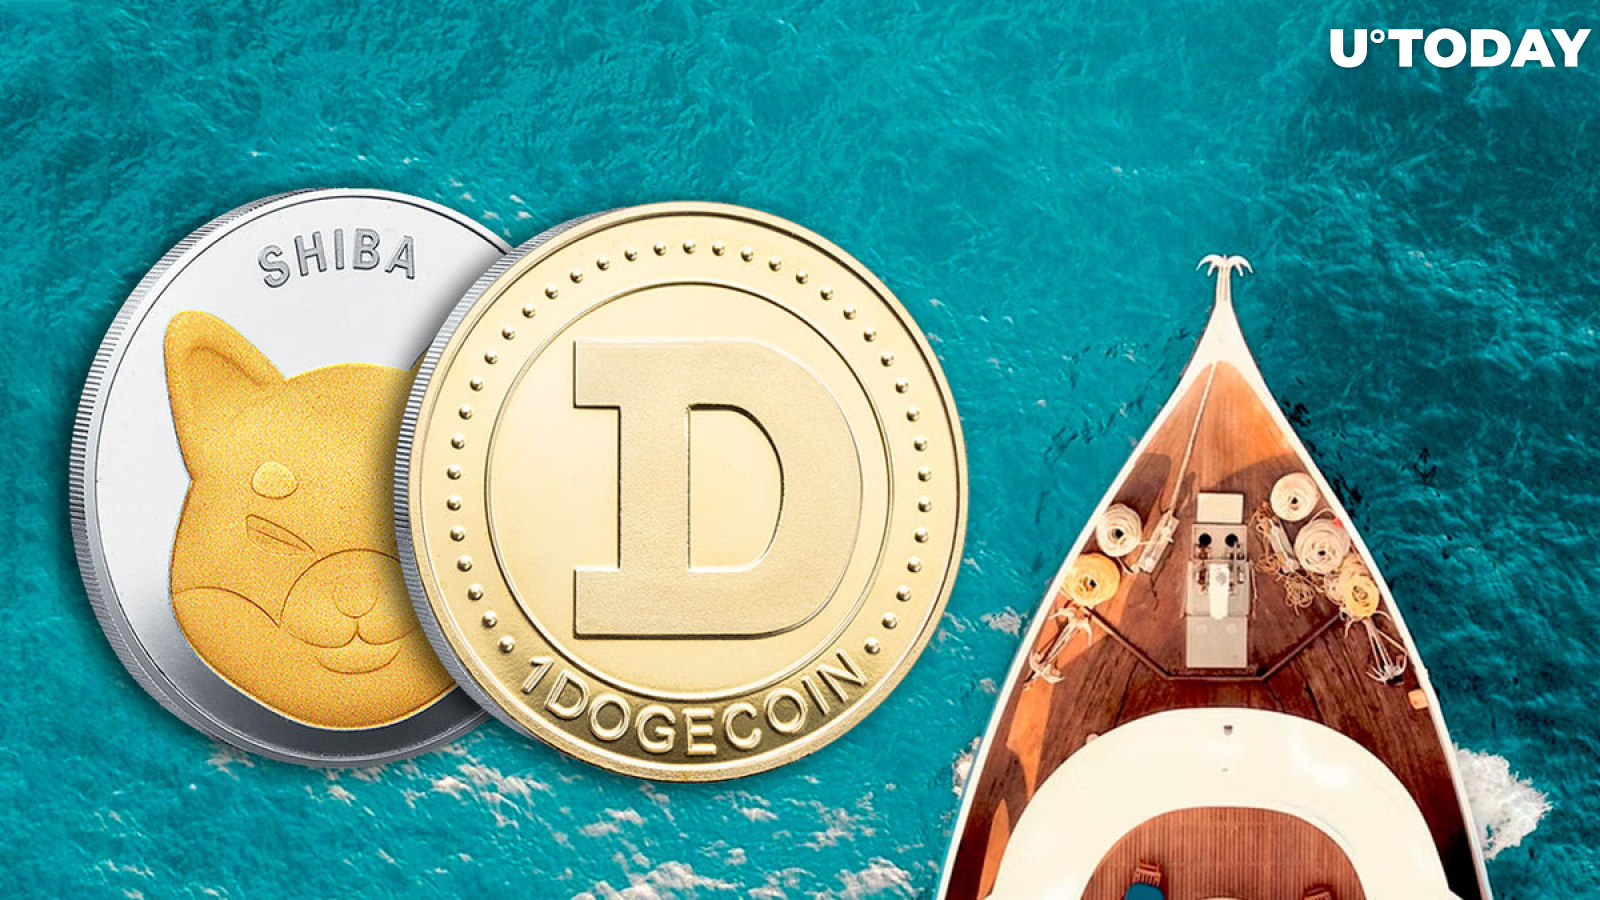 Shiba Inu, Dogecoin Holders Can Now Enjoy Luxury Yacht Services with Their Cryptos